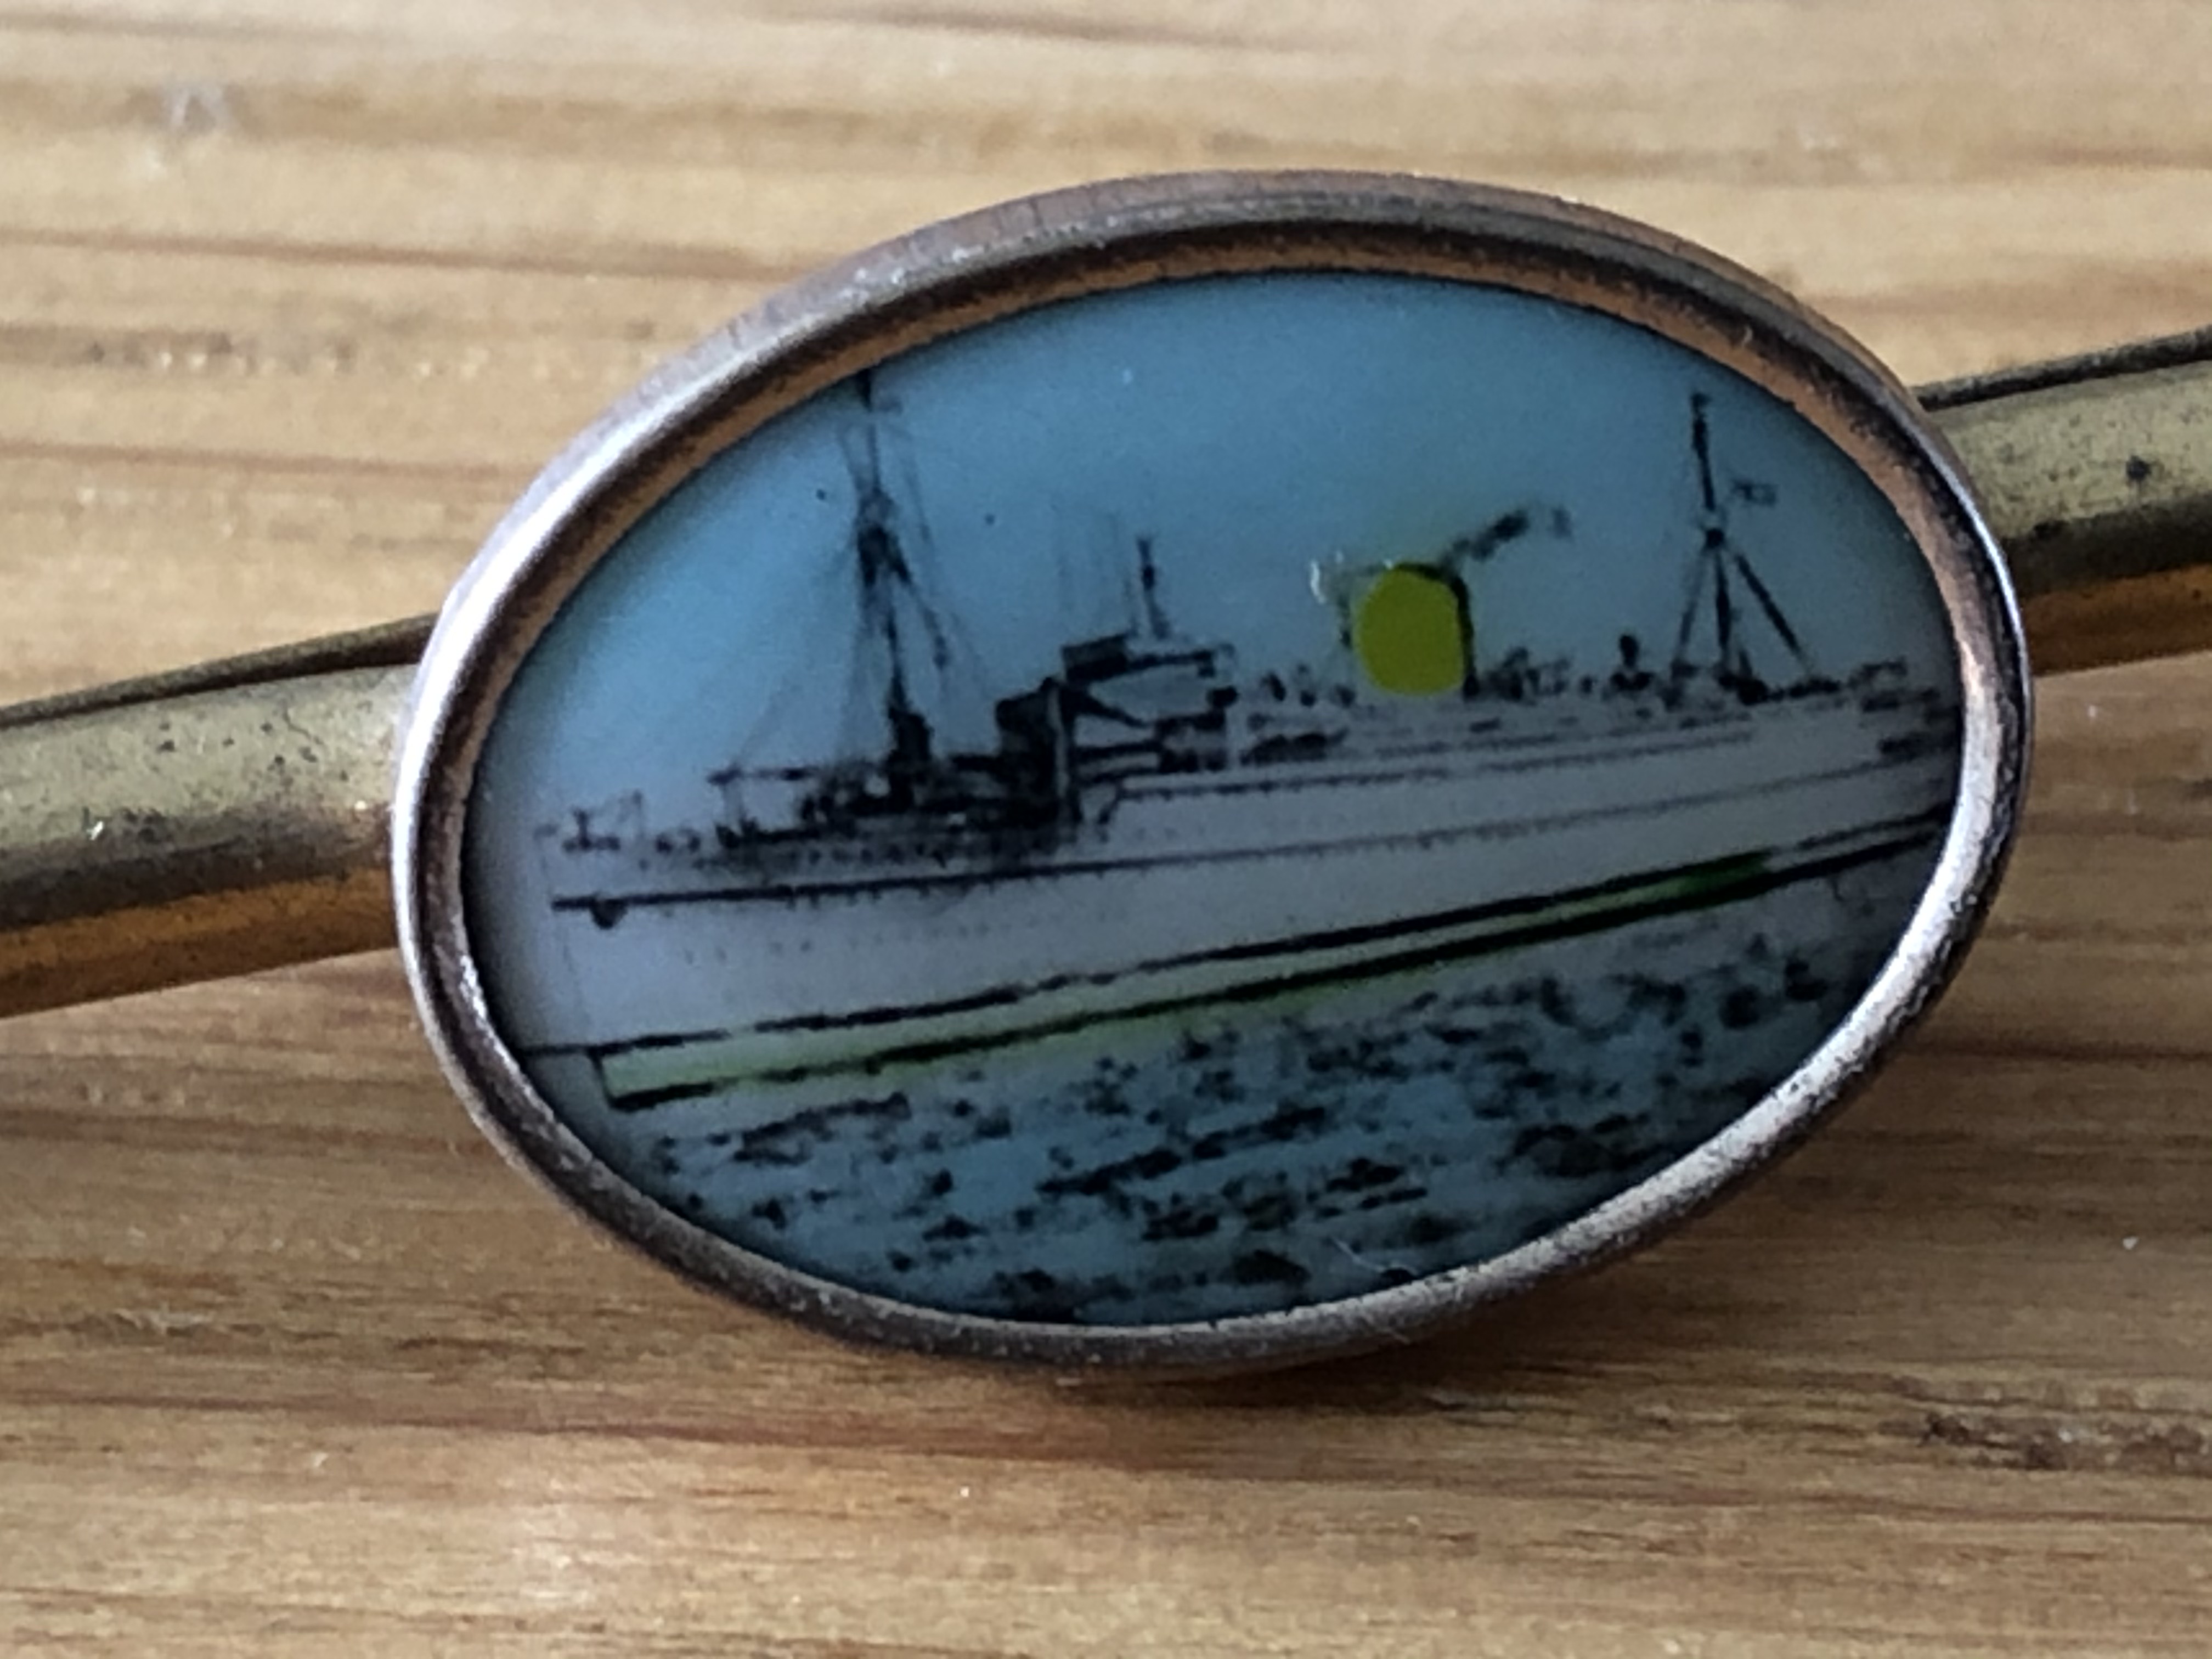 SOUVENIR TIE PIN FROM THE RMS MAURETANIA